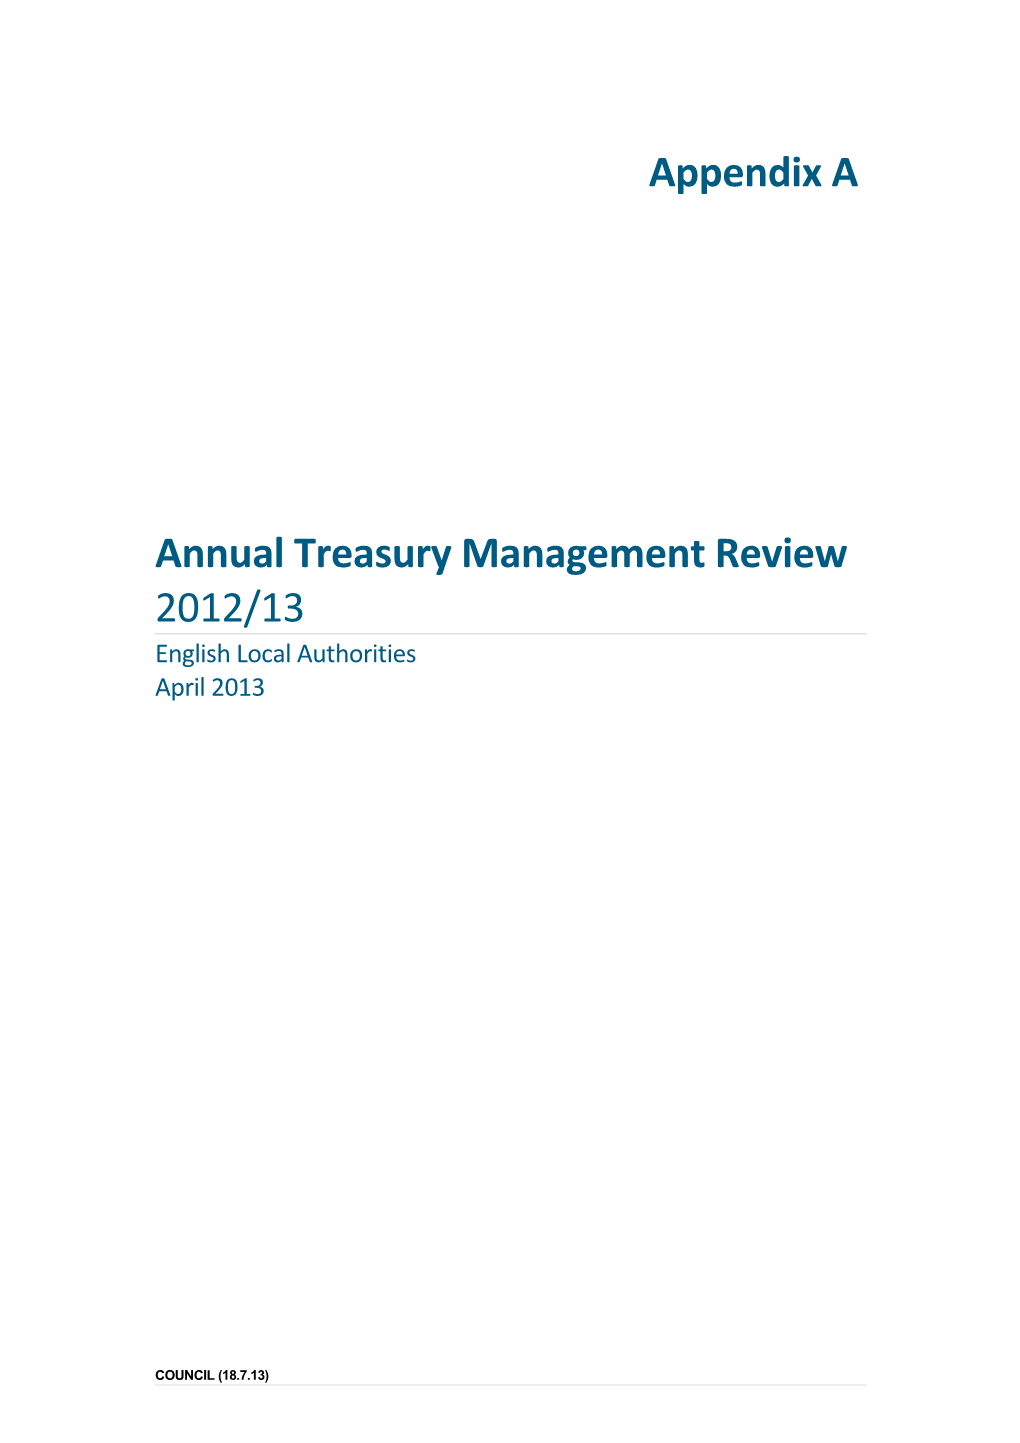 Annual Treasury Management Report 2010/11